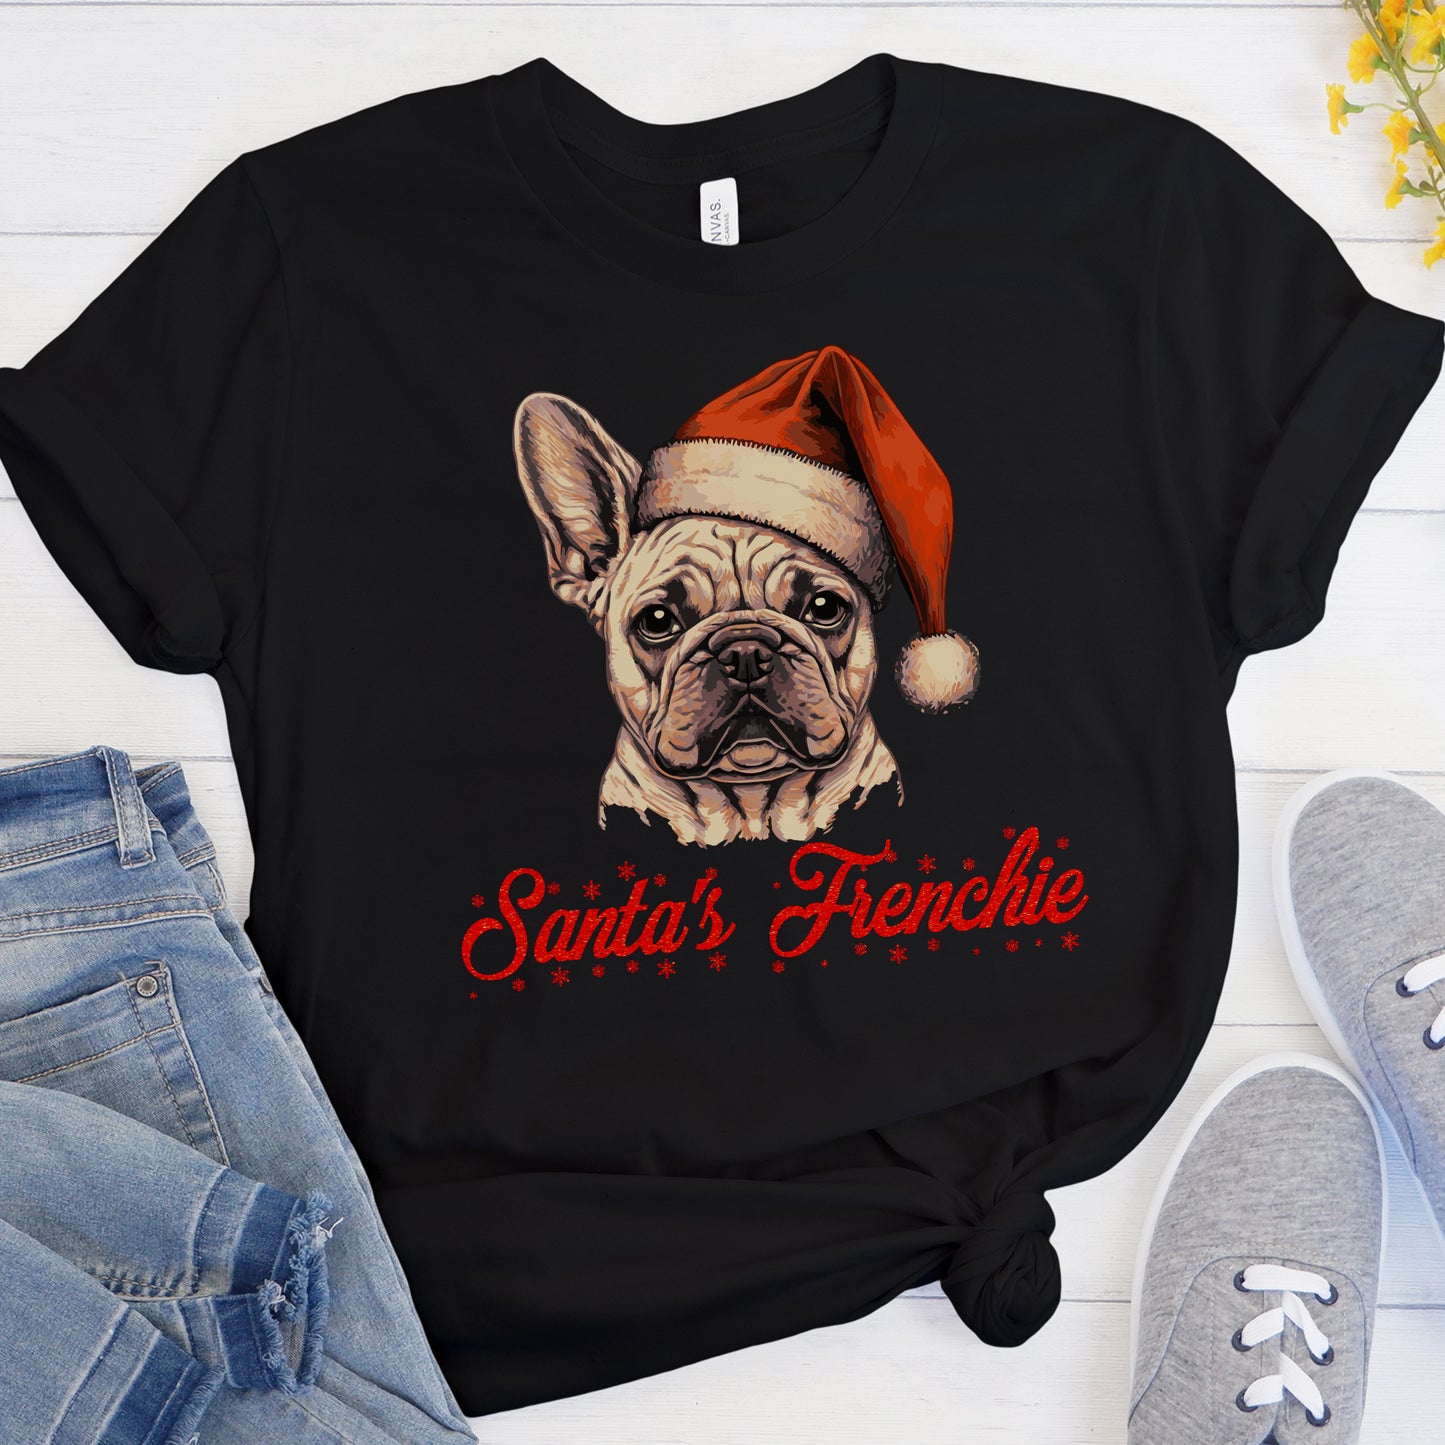 Santa's frenchie - Unisex T-Shirt